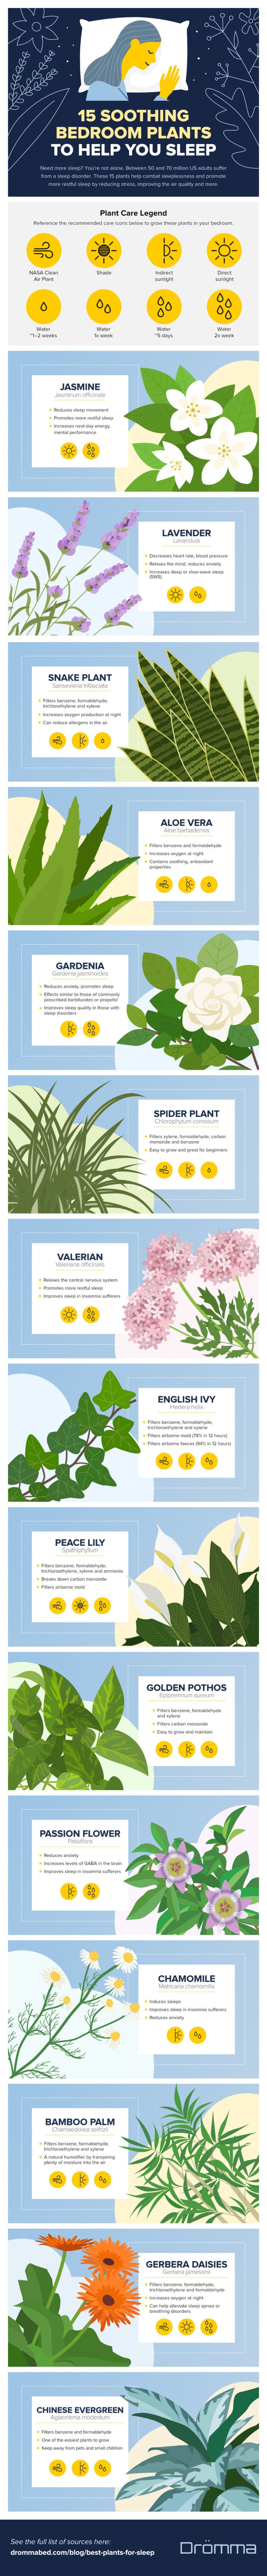 Infographic: 5 Soothing Bedroom Plants to Help You Sleep